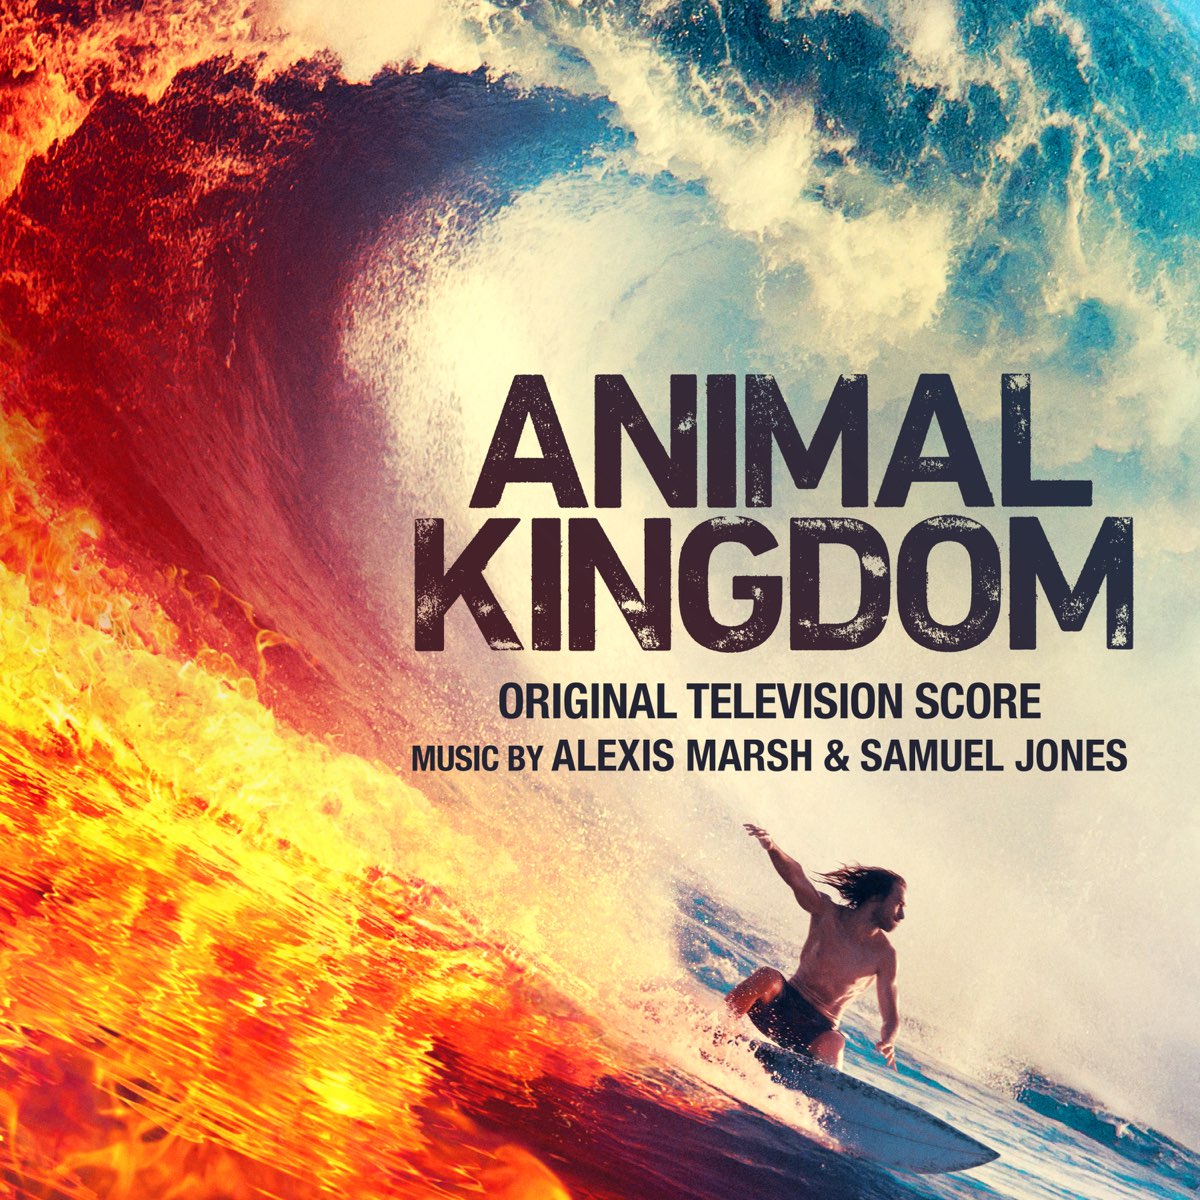 Animal Kingdom (Original Television Score) by Alexis Marsh & Samuel Jones  on Apple Music